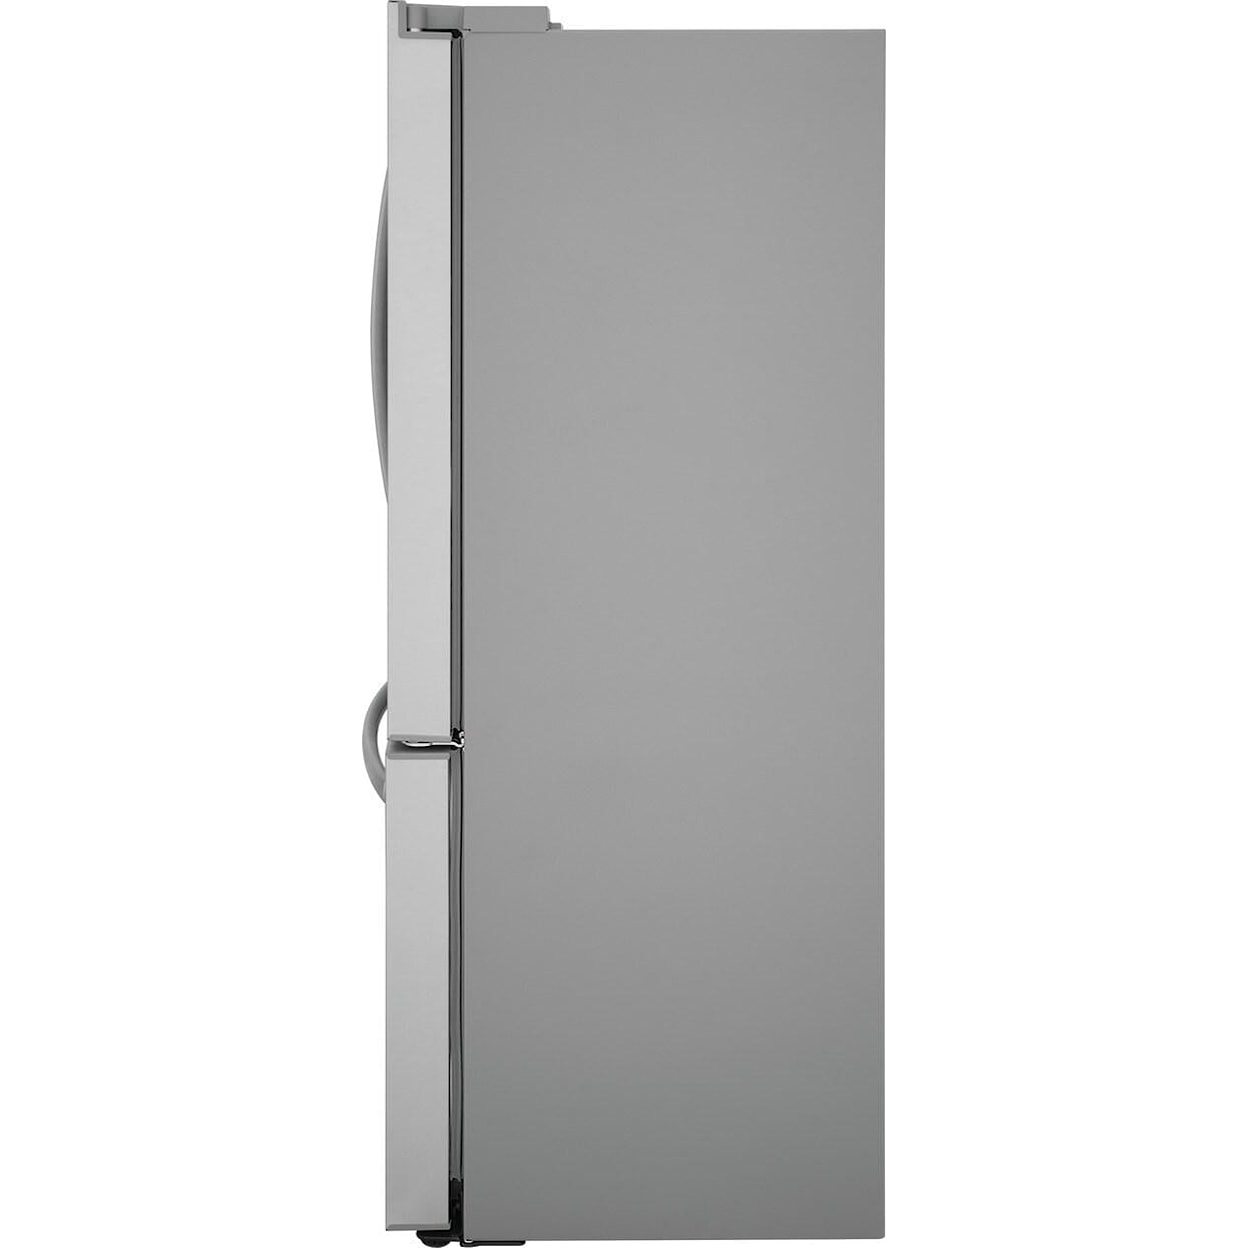 Frigidaire Refrigerators Refrigerator